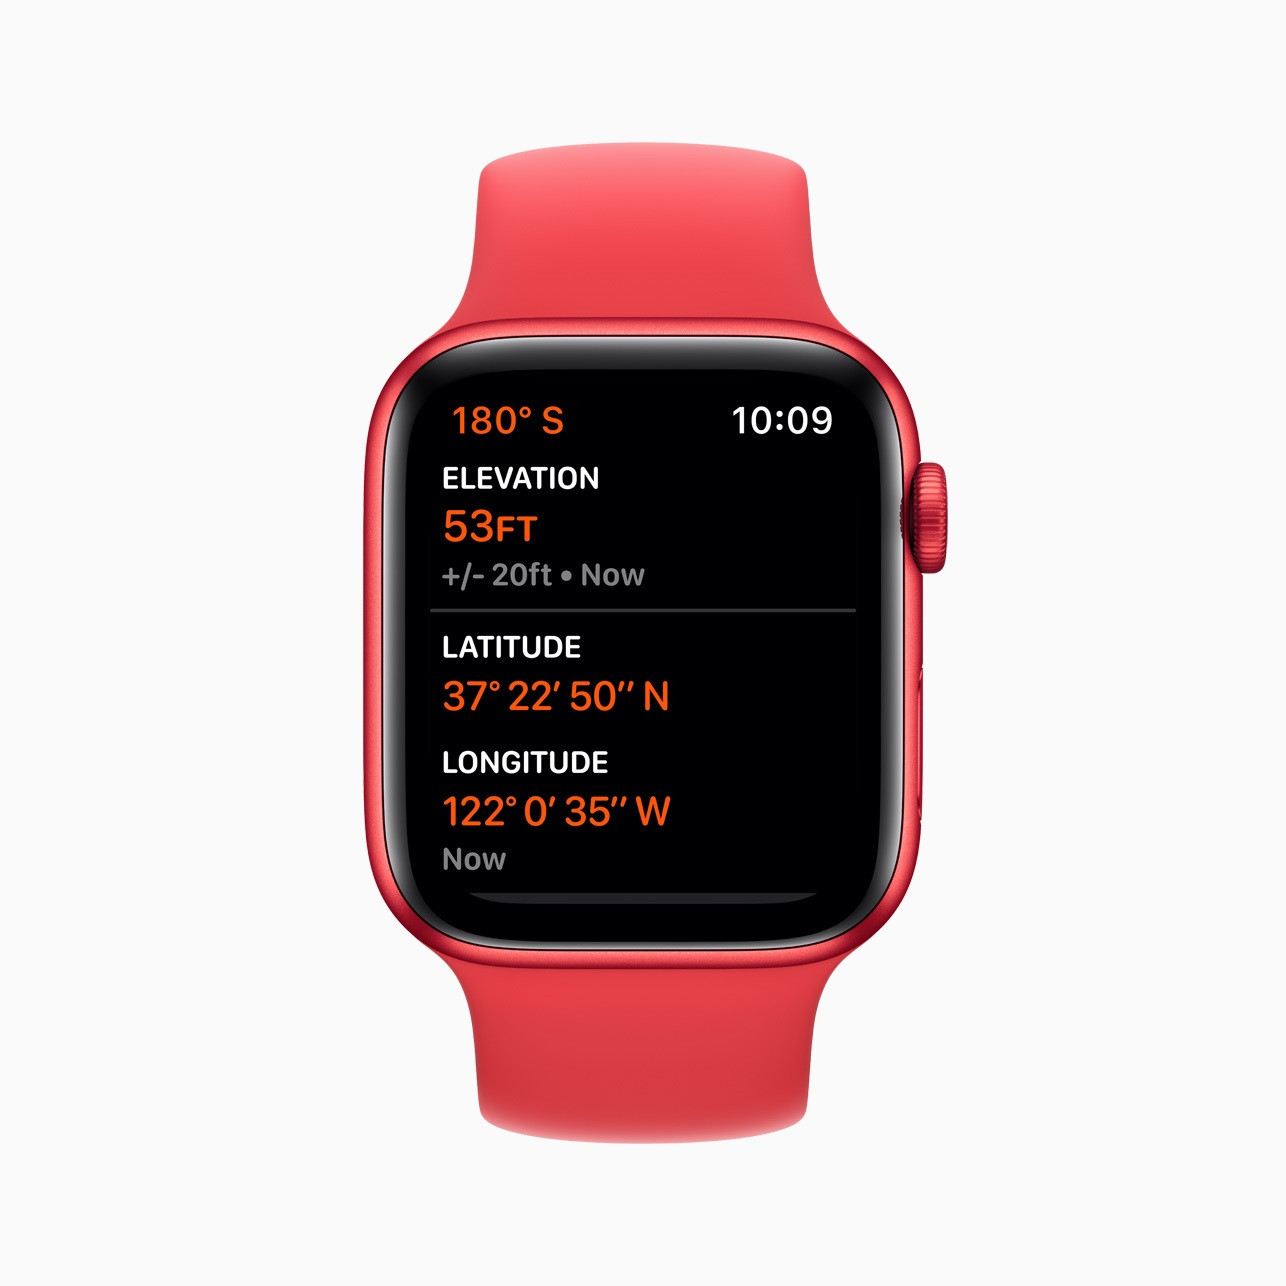 ▲ Apple Watch Series 6 上的全天候高度计可全天提供实时海拔测量。